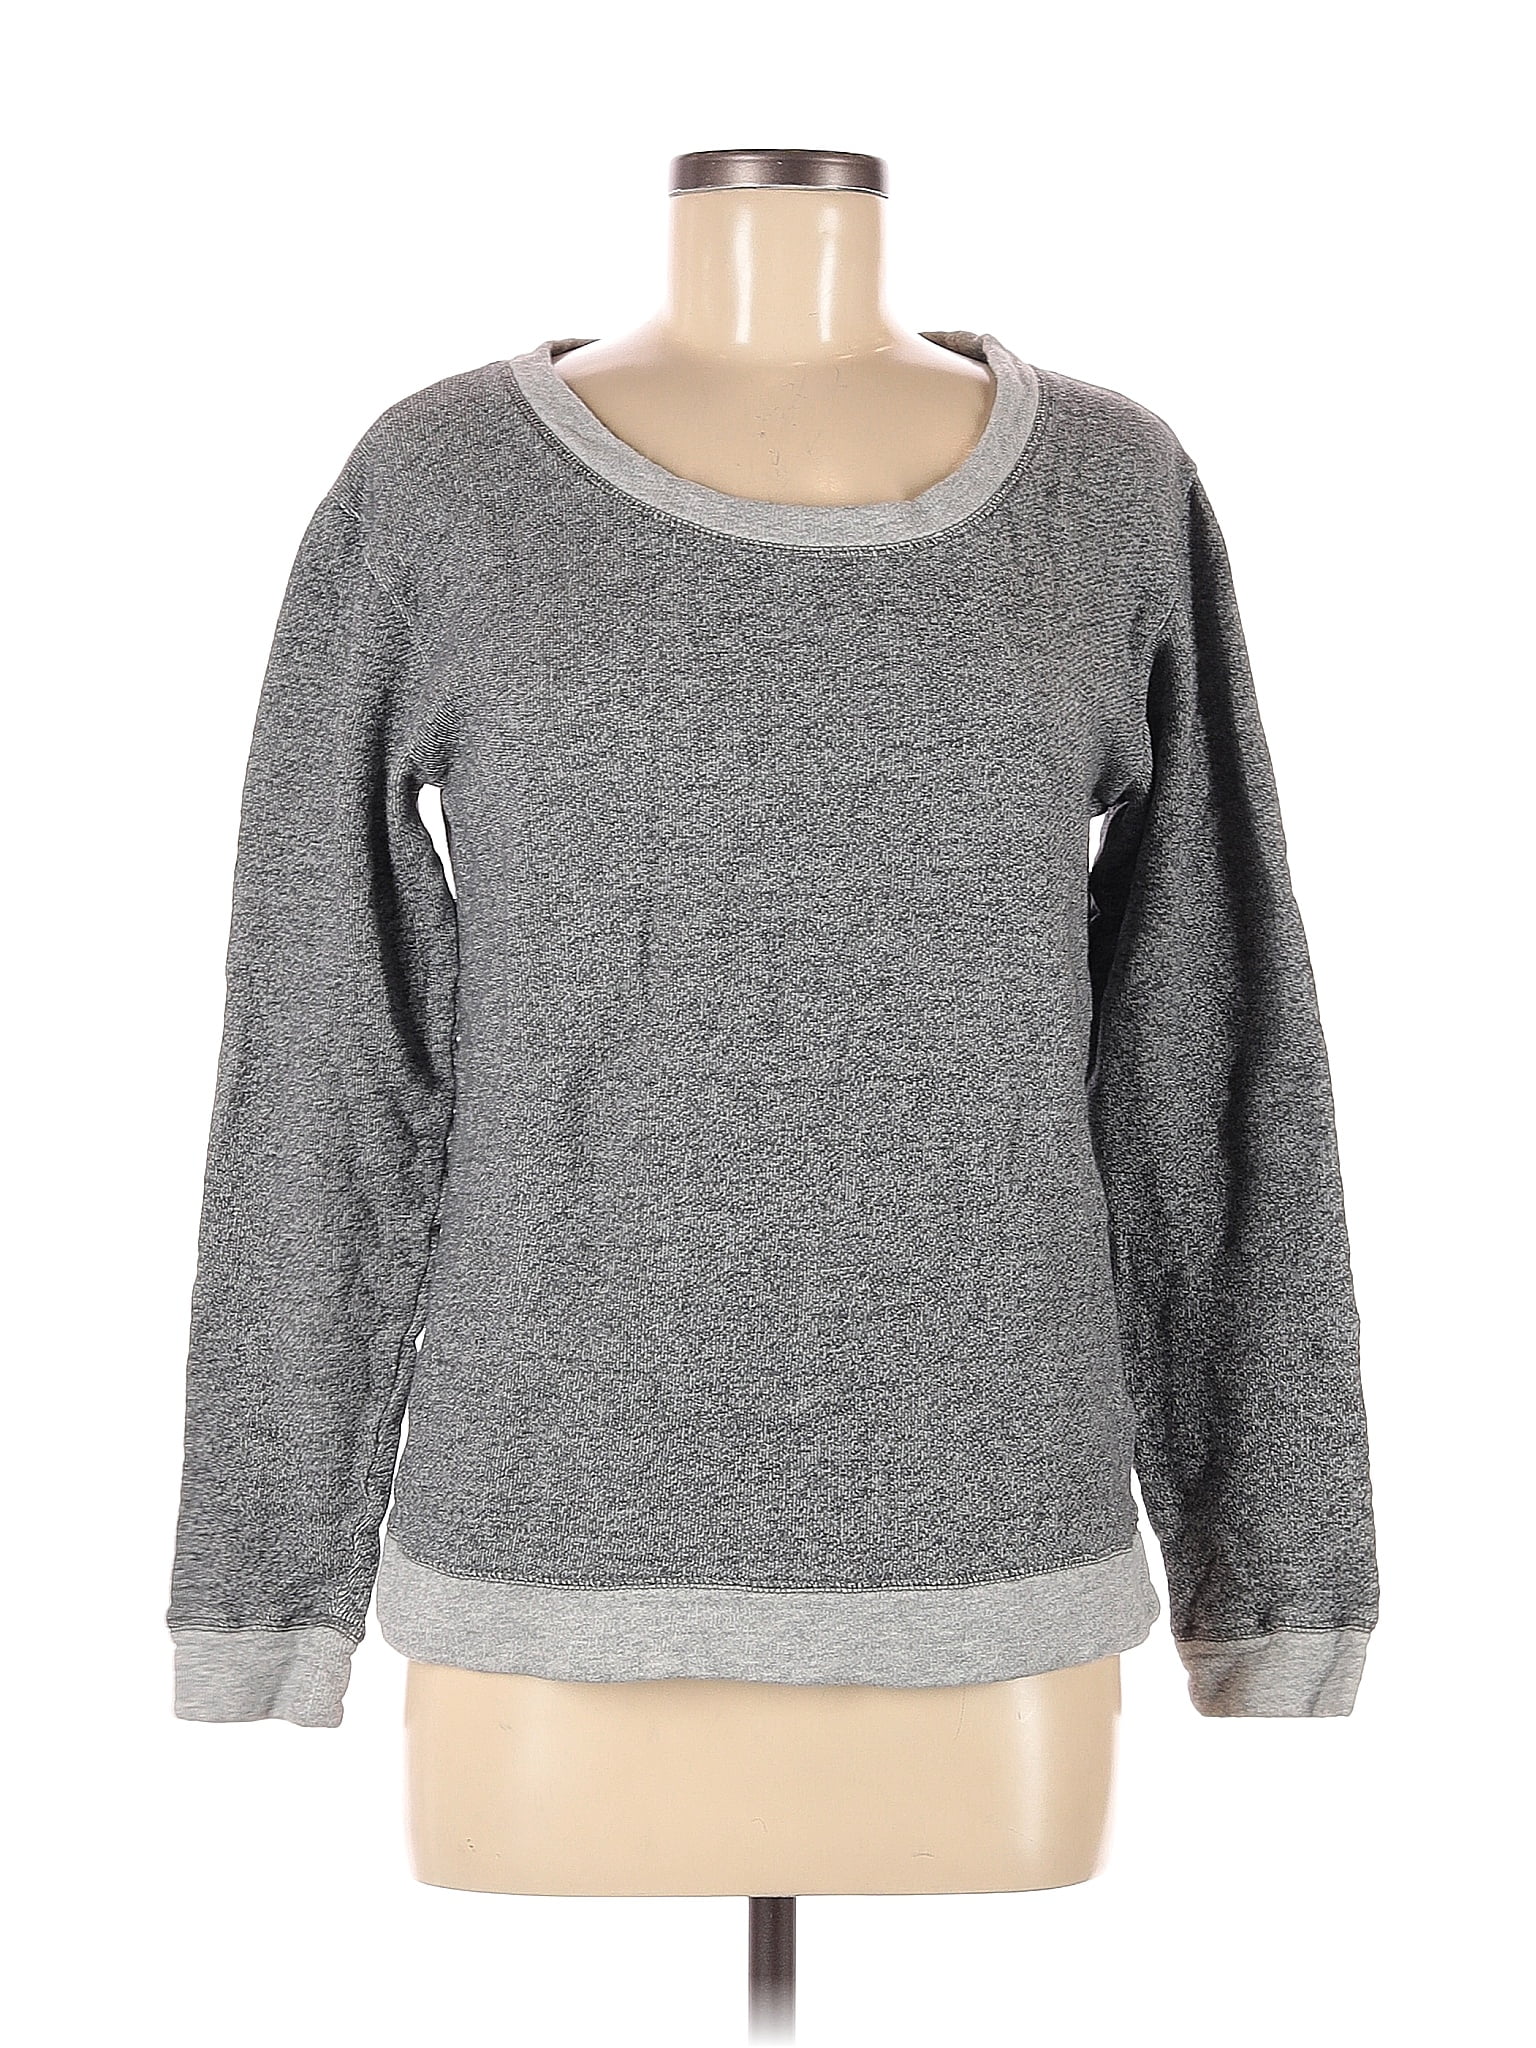 J.Crew 100% Cotton Solid Color Block Tweed Gray Sweatshirt Size M - 78% ...